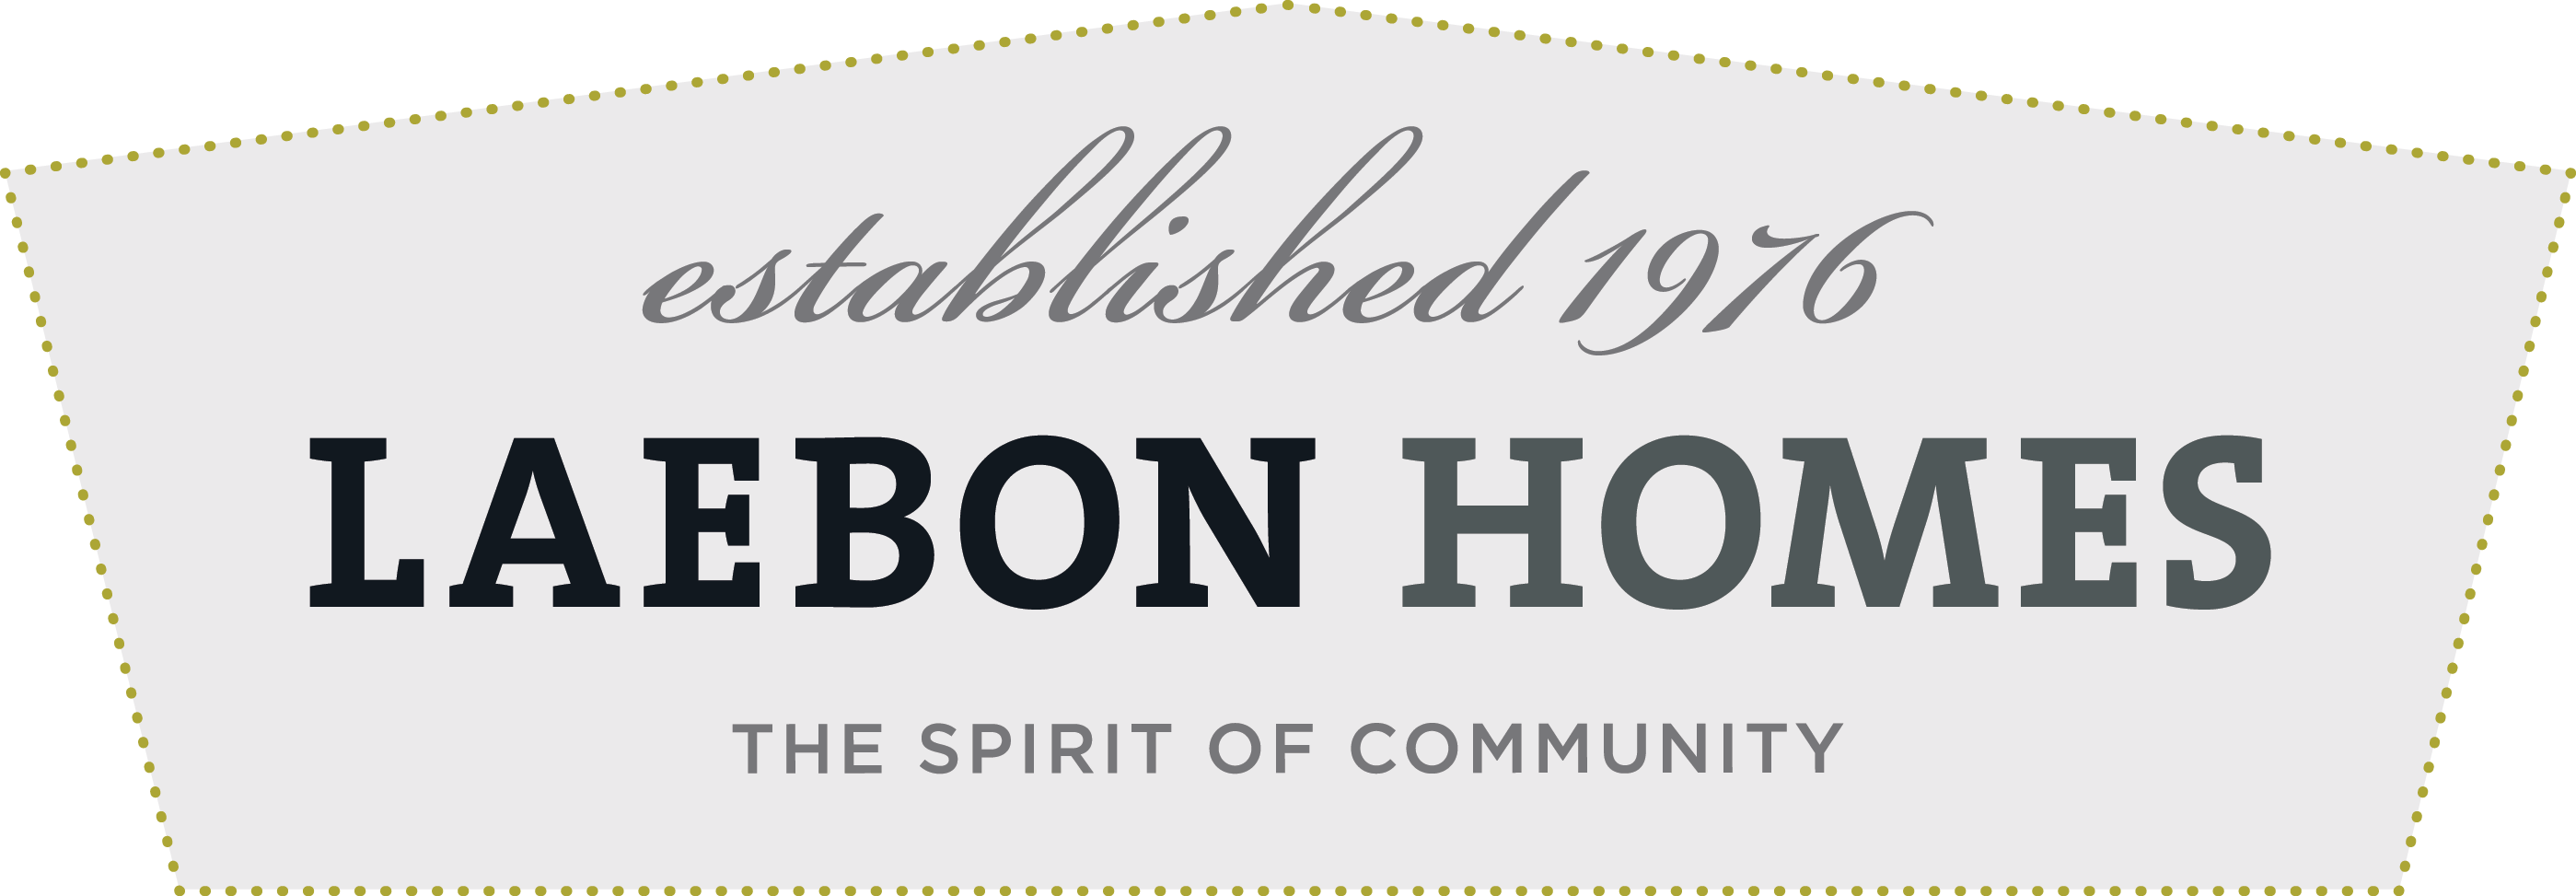 Laebon Homes logo